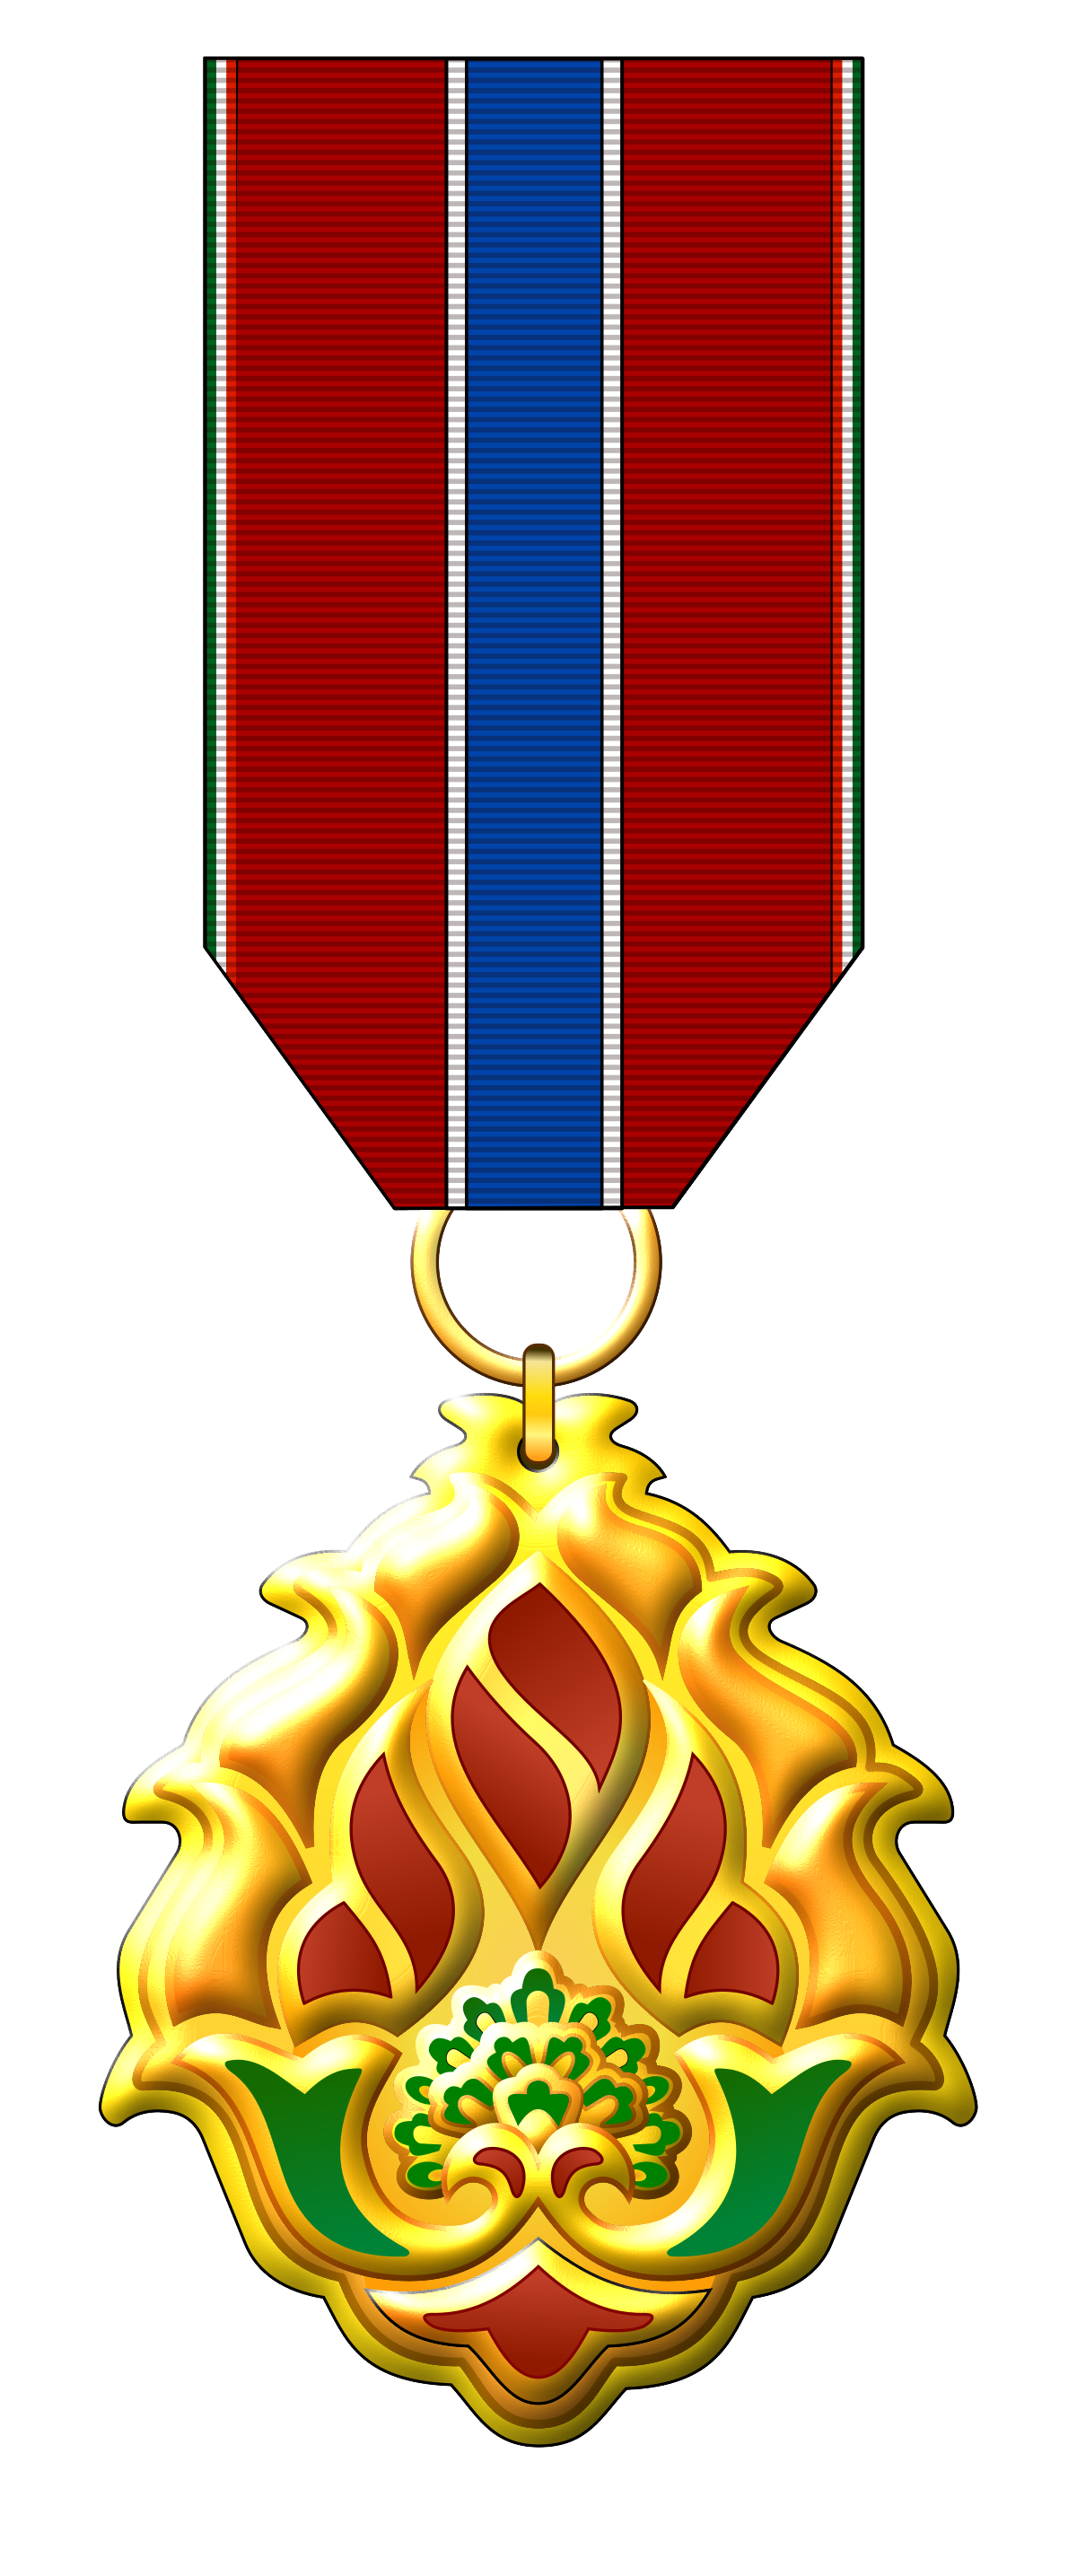 medal clipart medal valor